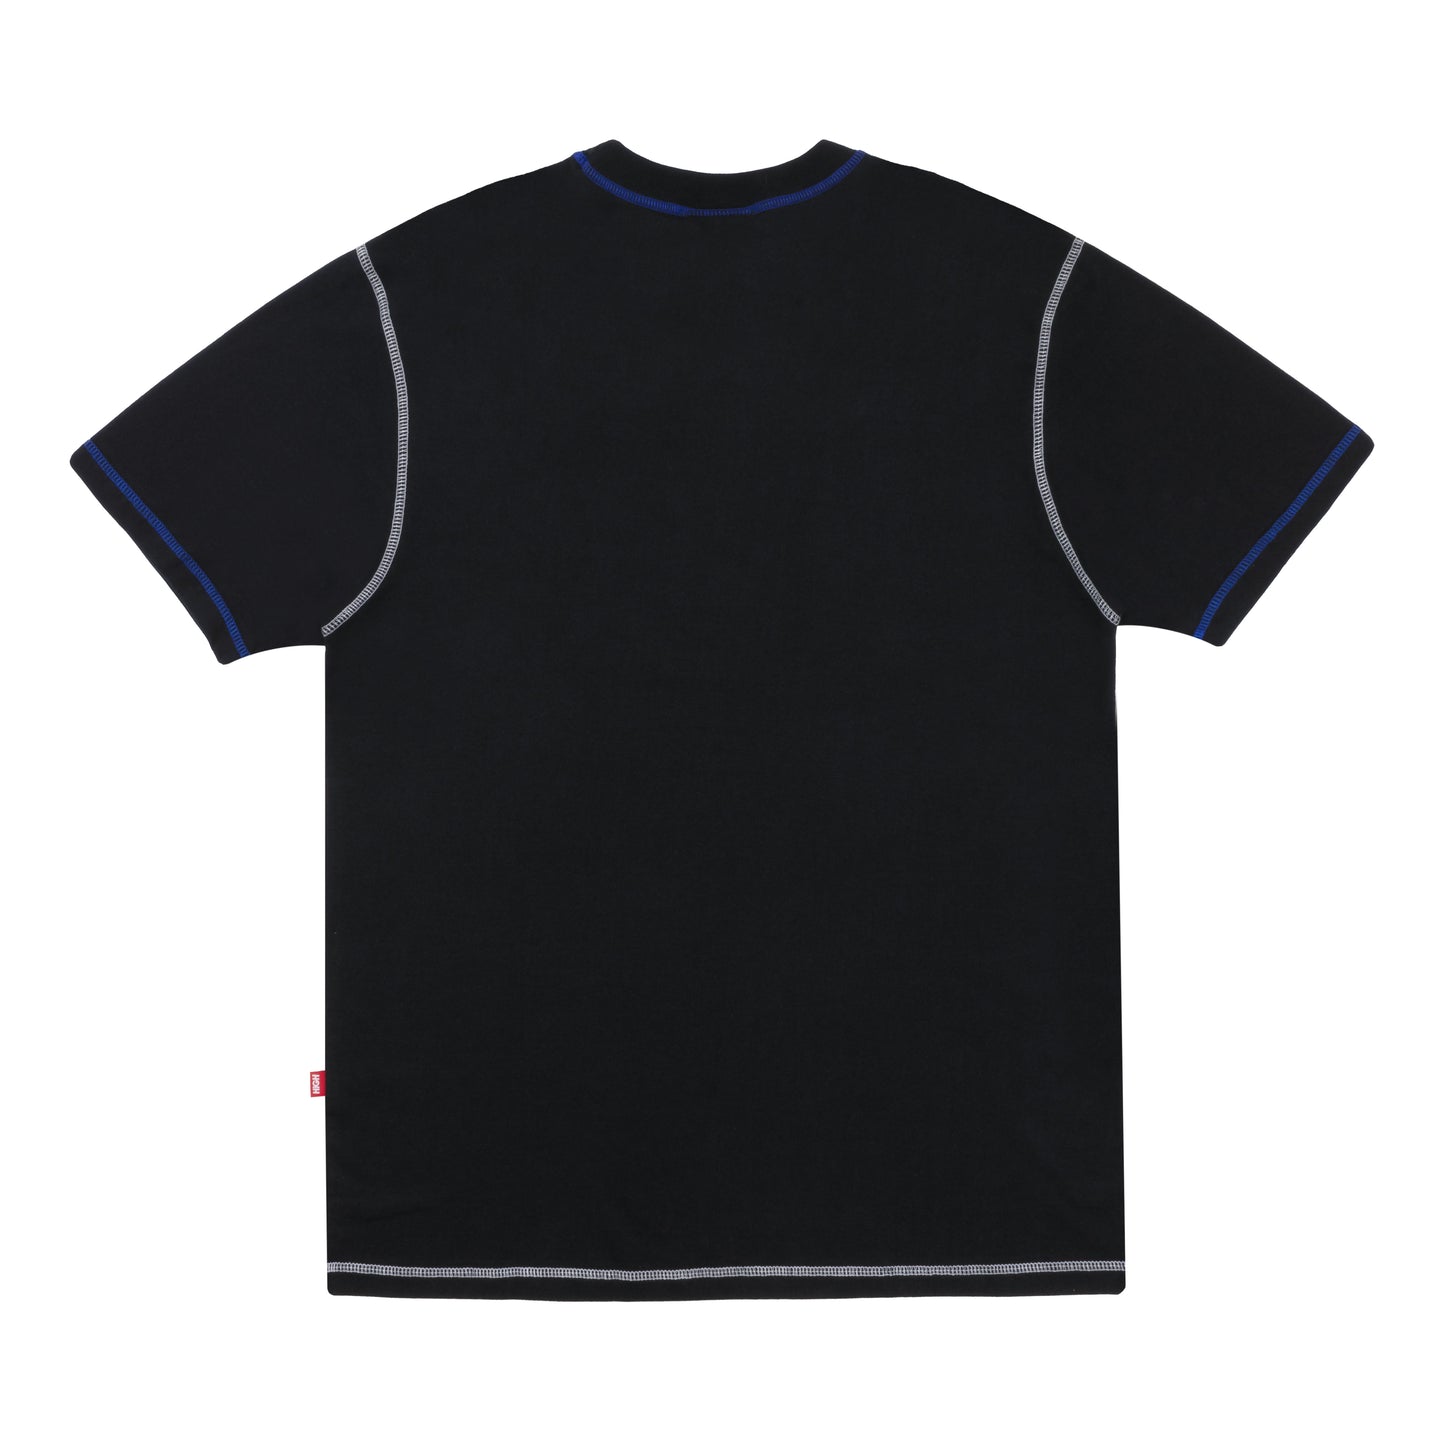 HIGH - Camiseta Colored Black/Blue